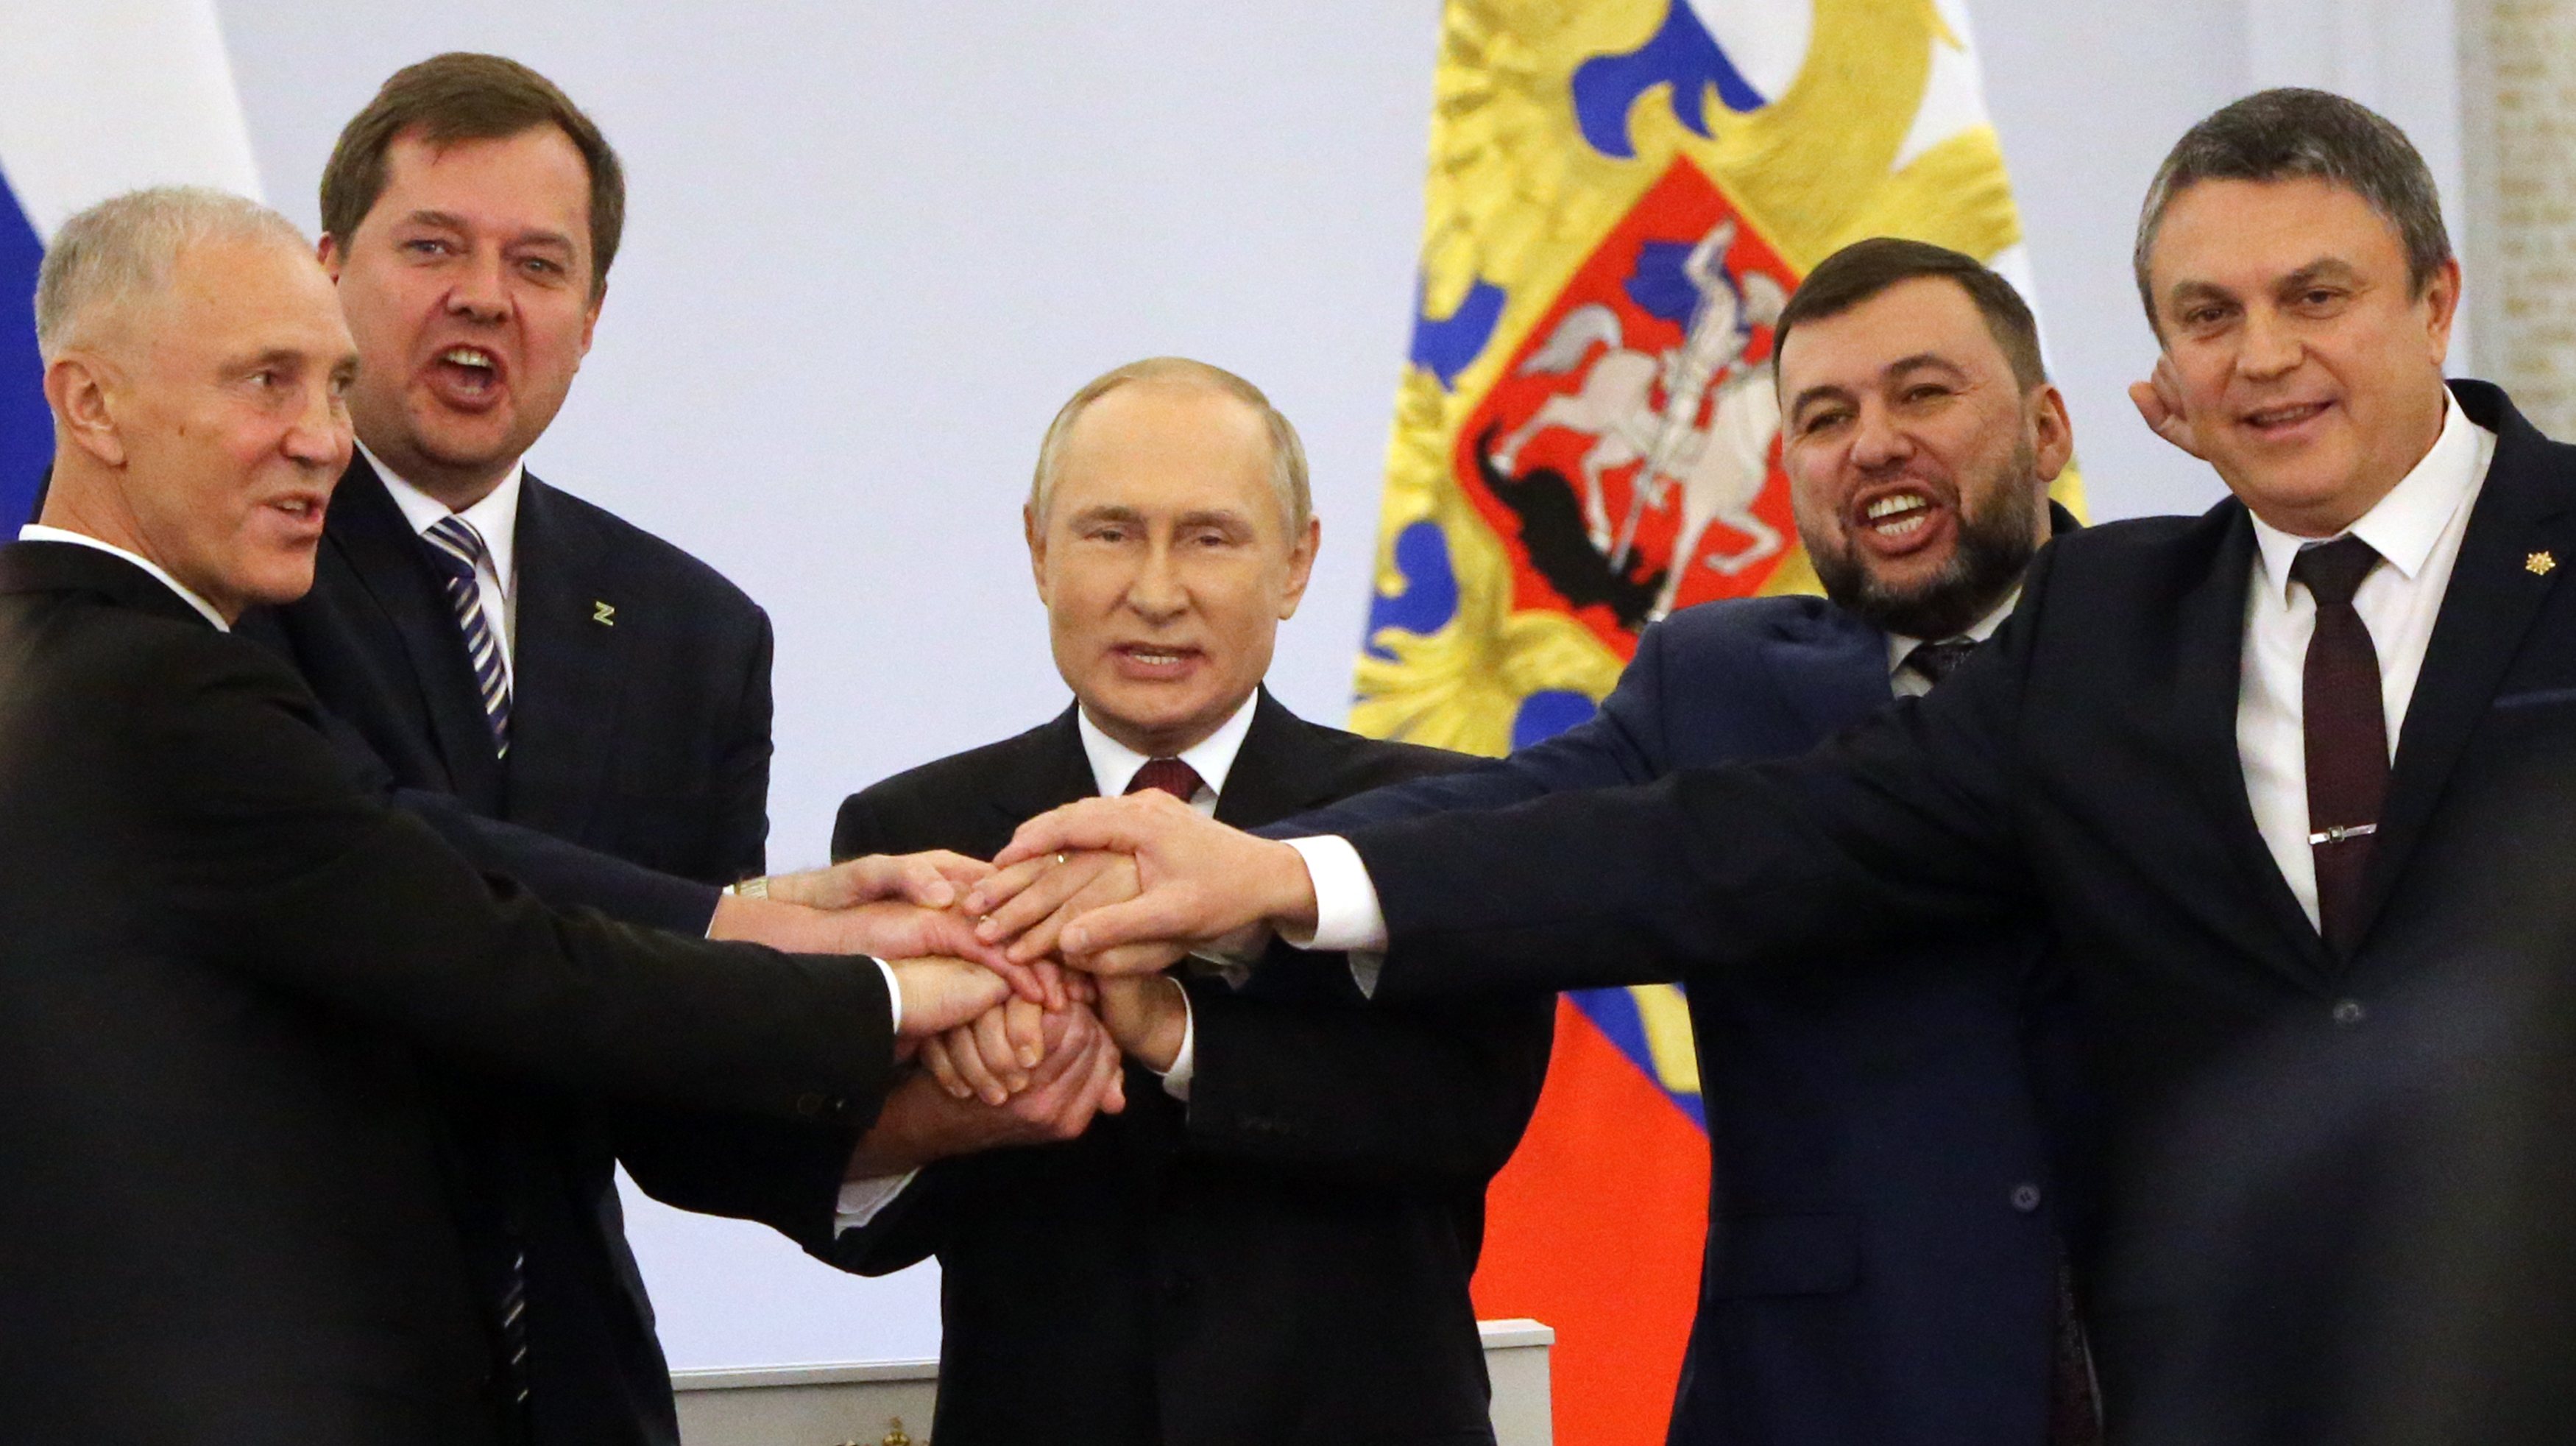 Russian President Vladimir Putin Hosts Ceremony With Separatist Leaders Of Ukrainian Regions After Referendum